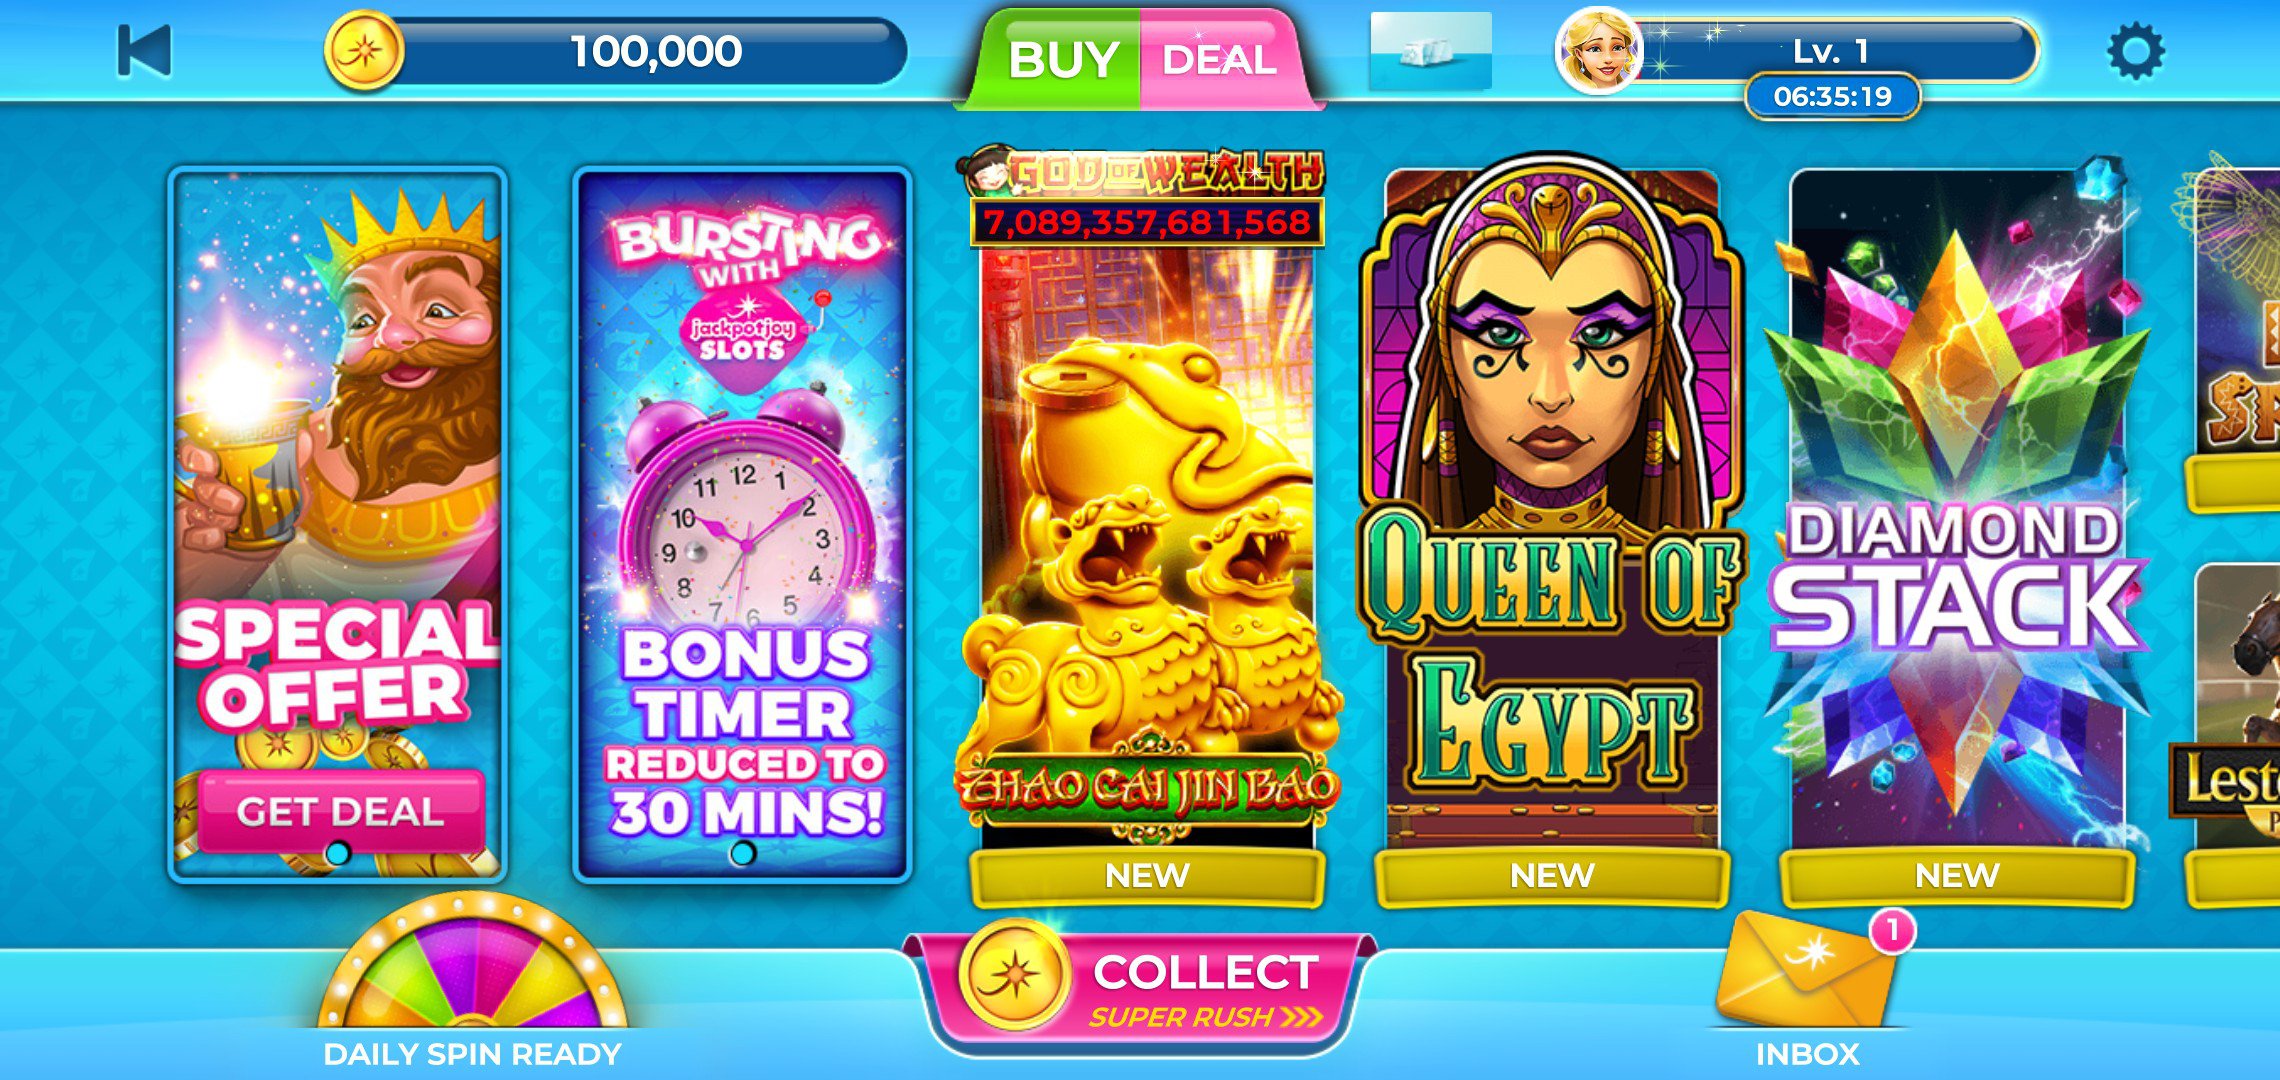 The future of Online Casino